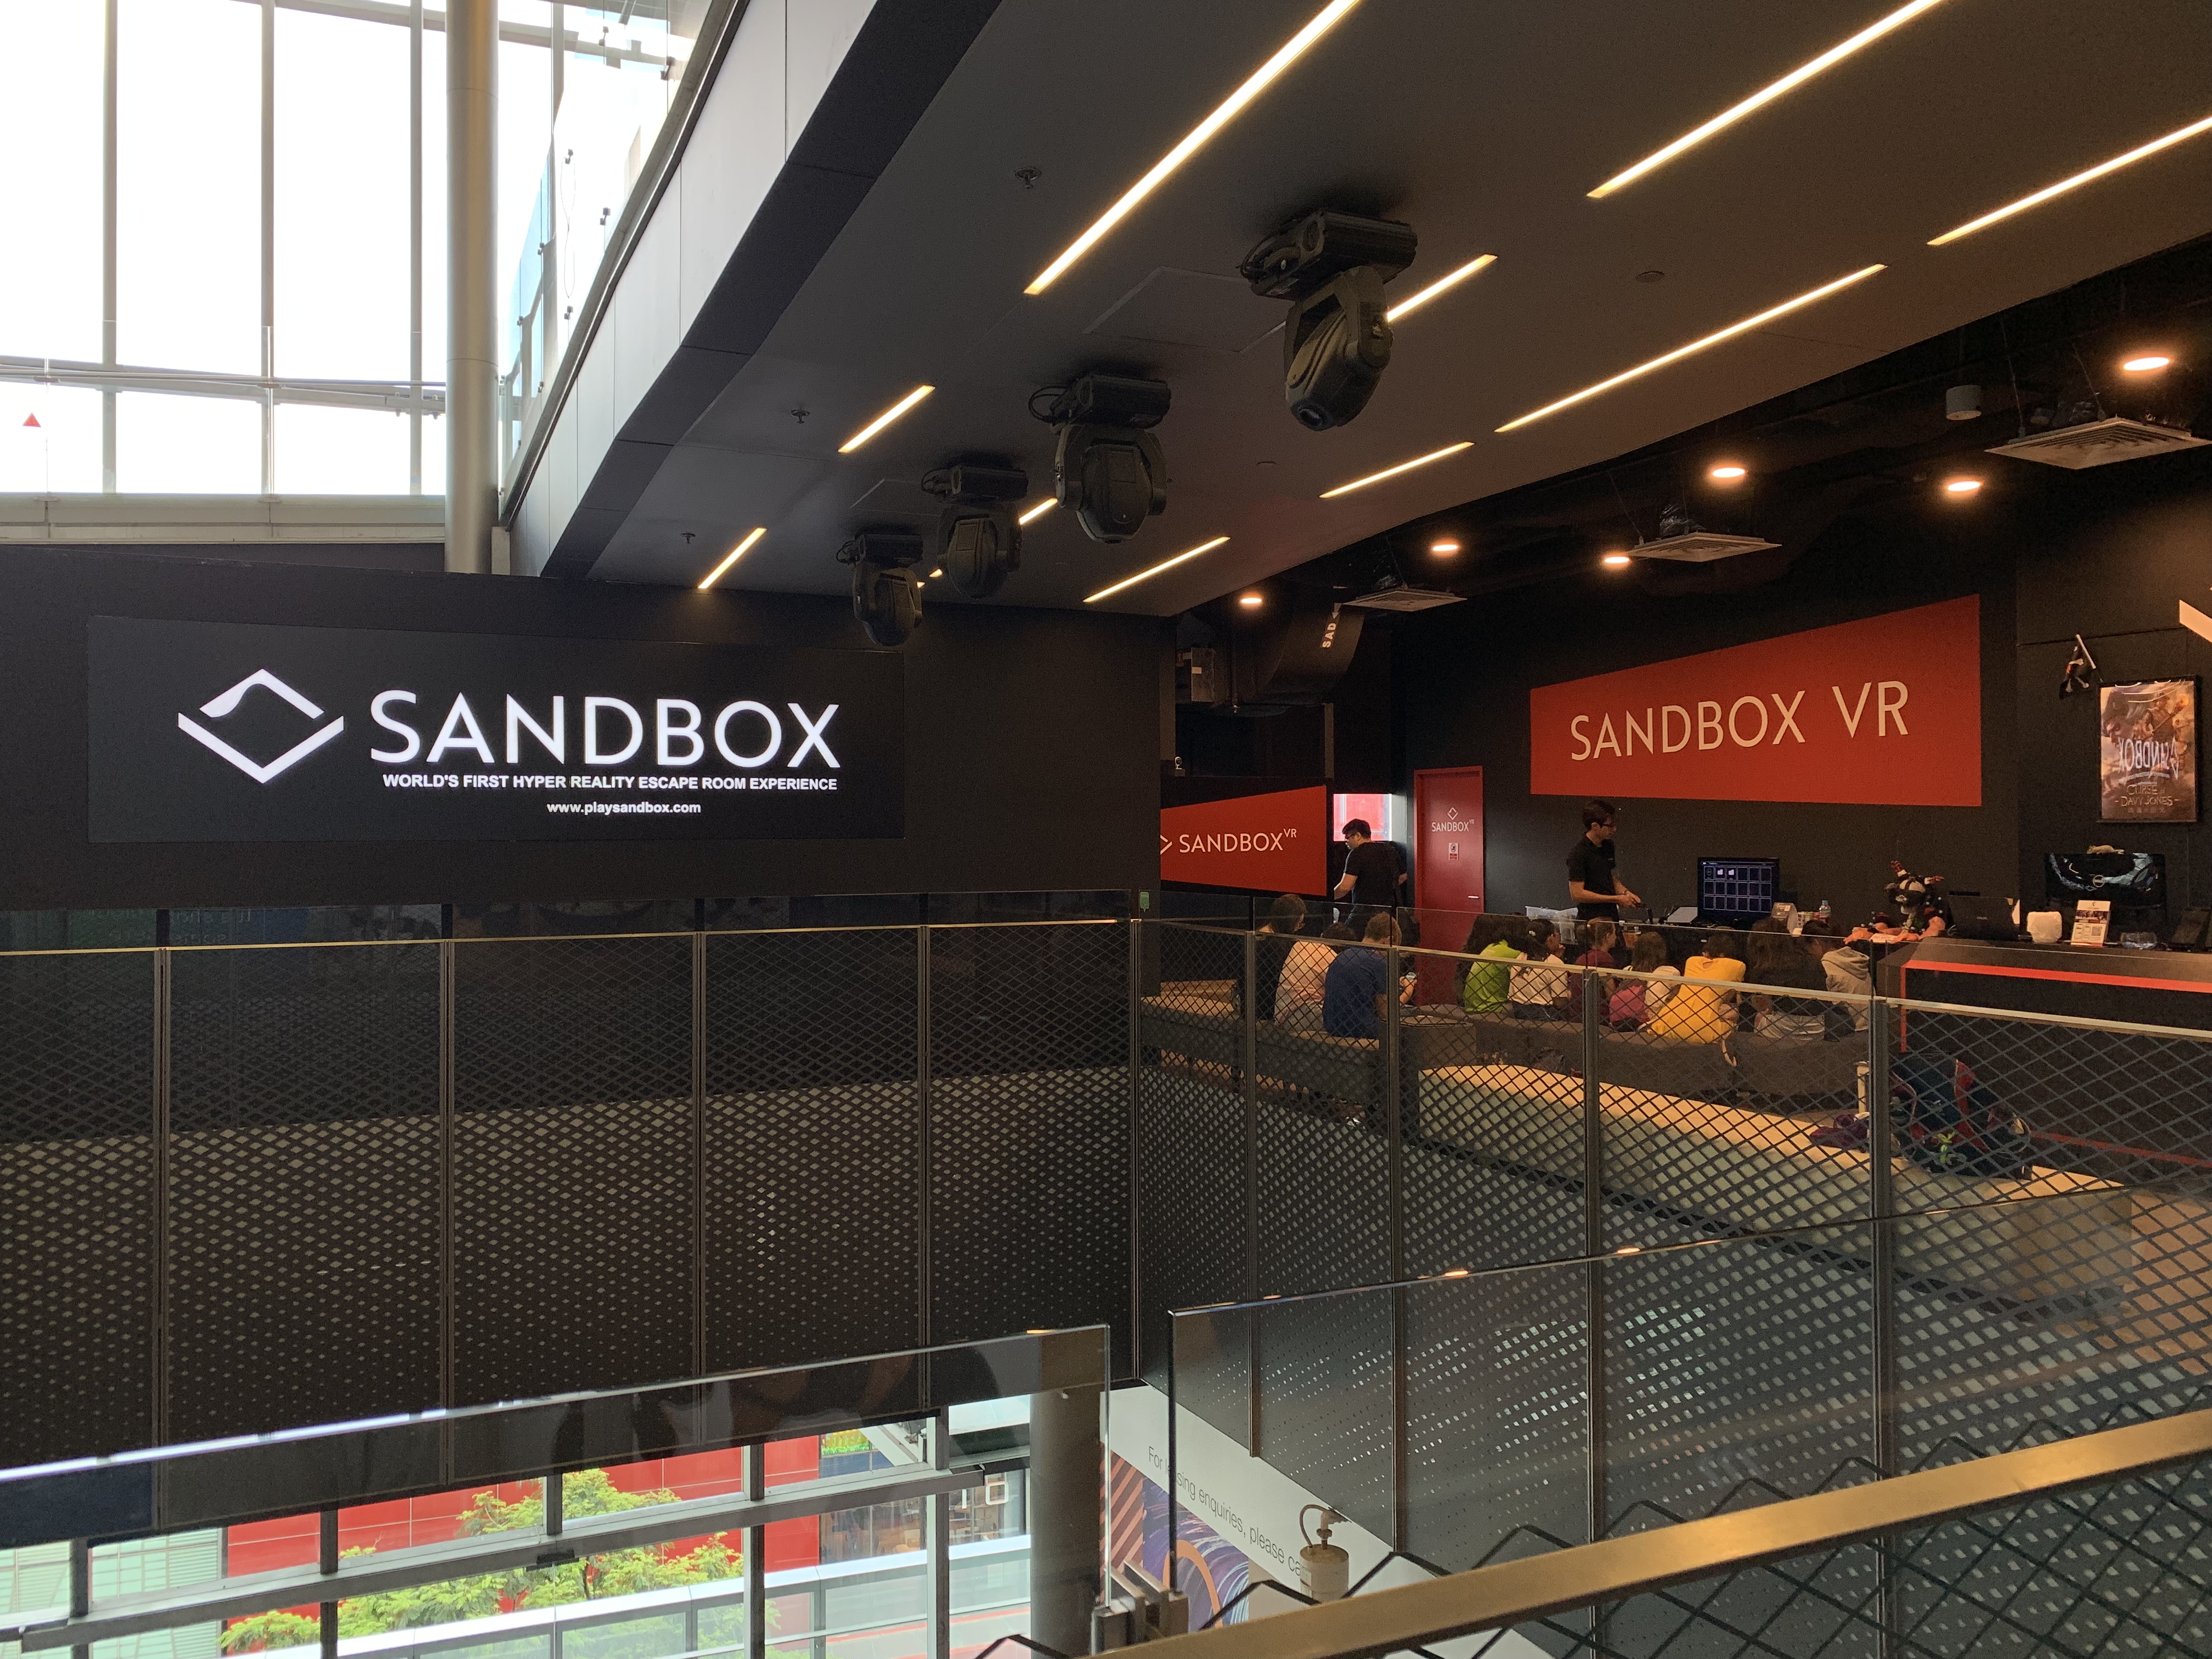 Sandbox VR Singapore Review « Blog | lesterchan.net